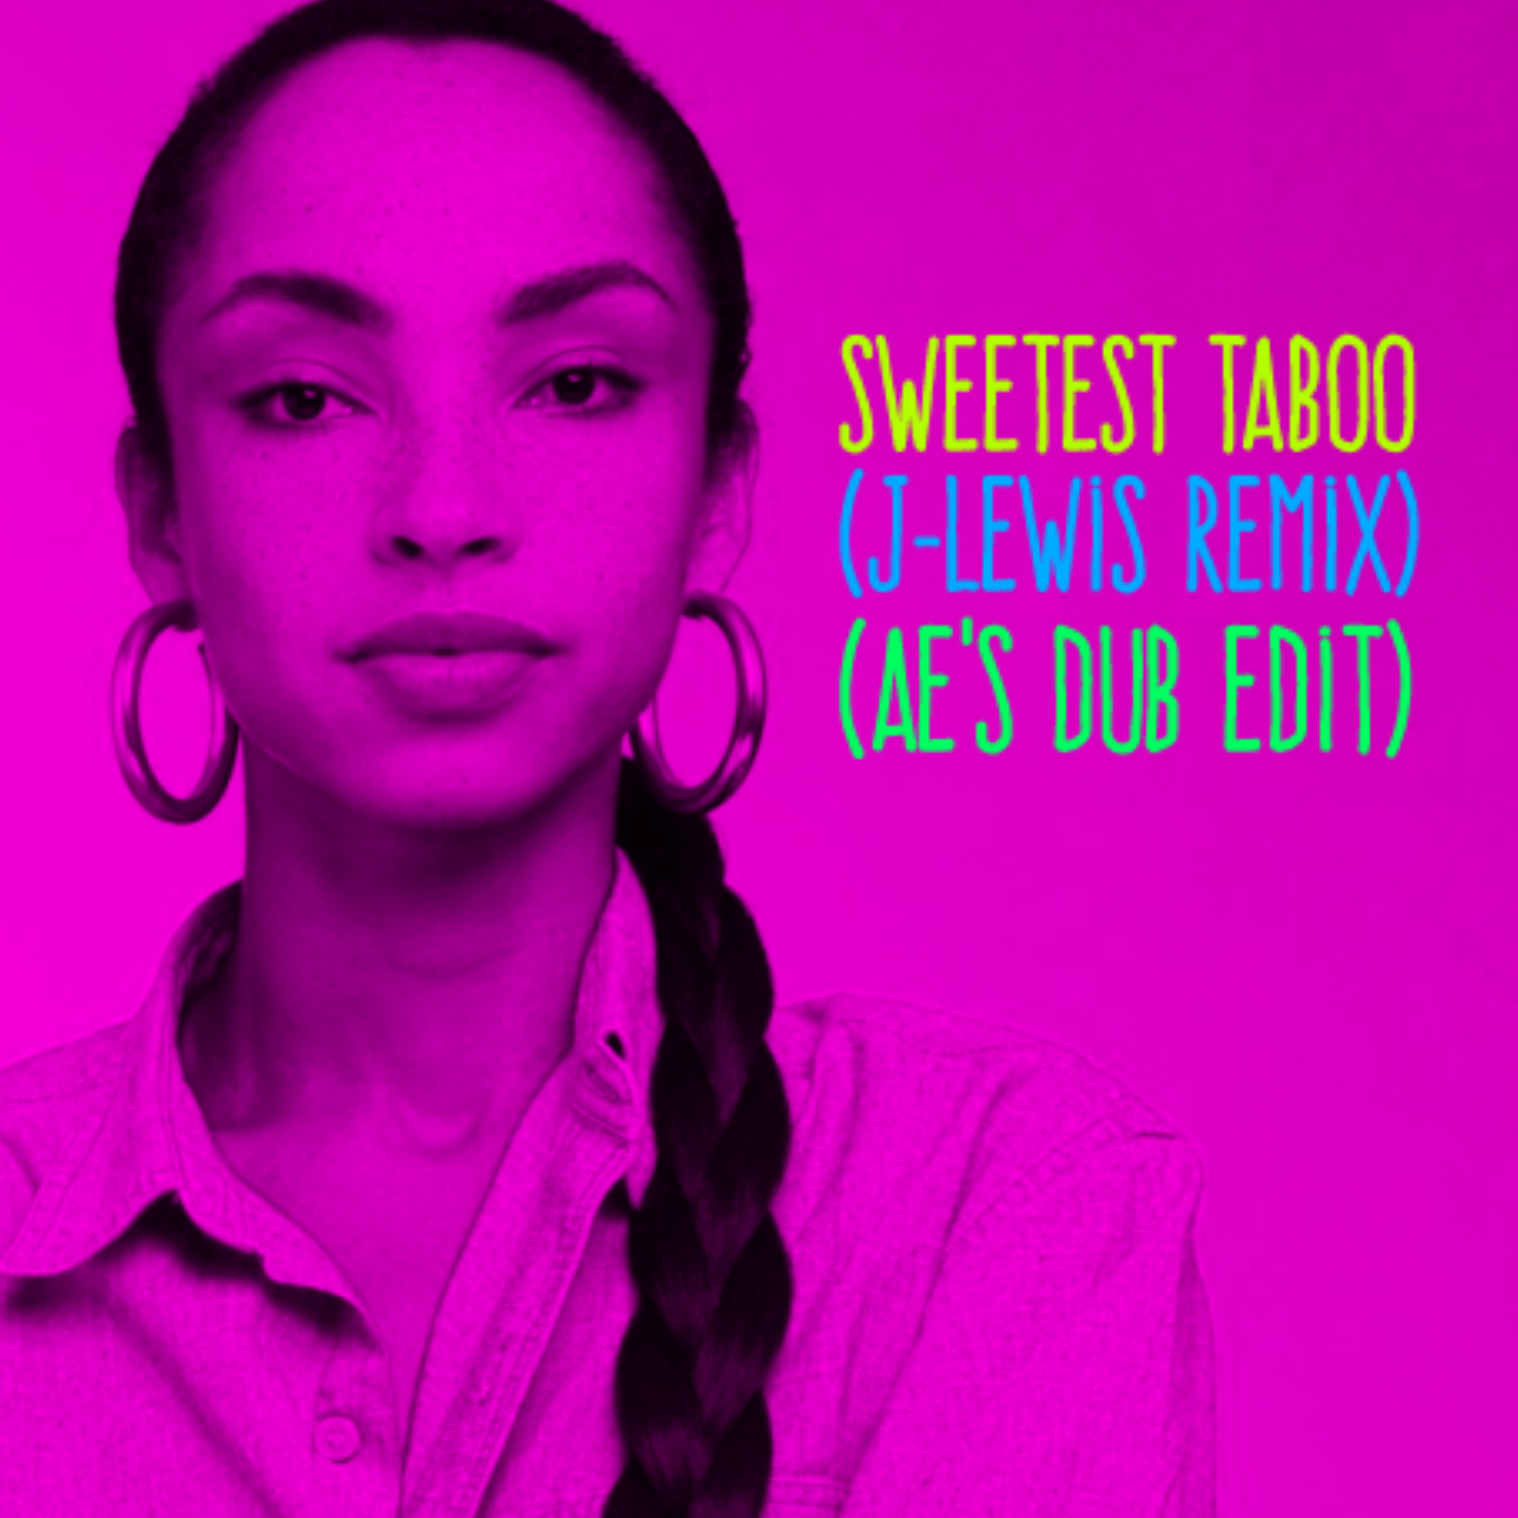 Sweetest Taboo (J-Lewis Remix)(Ae’s Dub Edit)